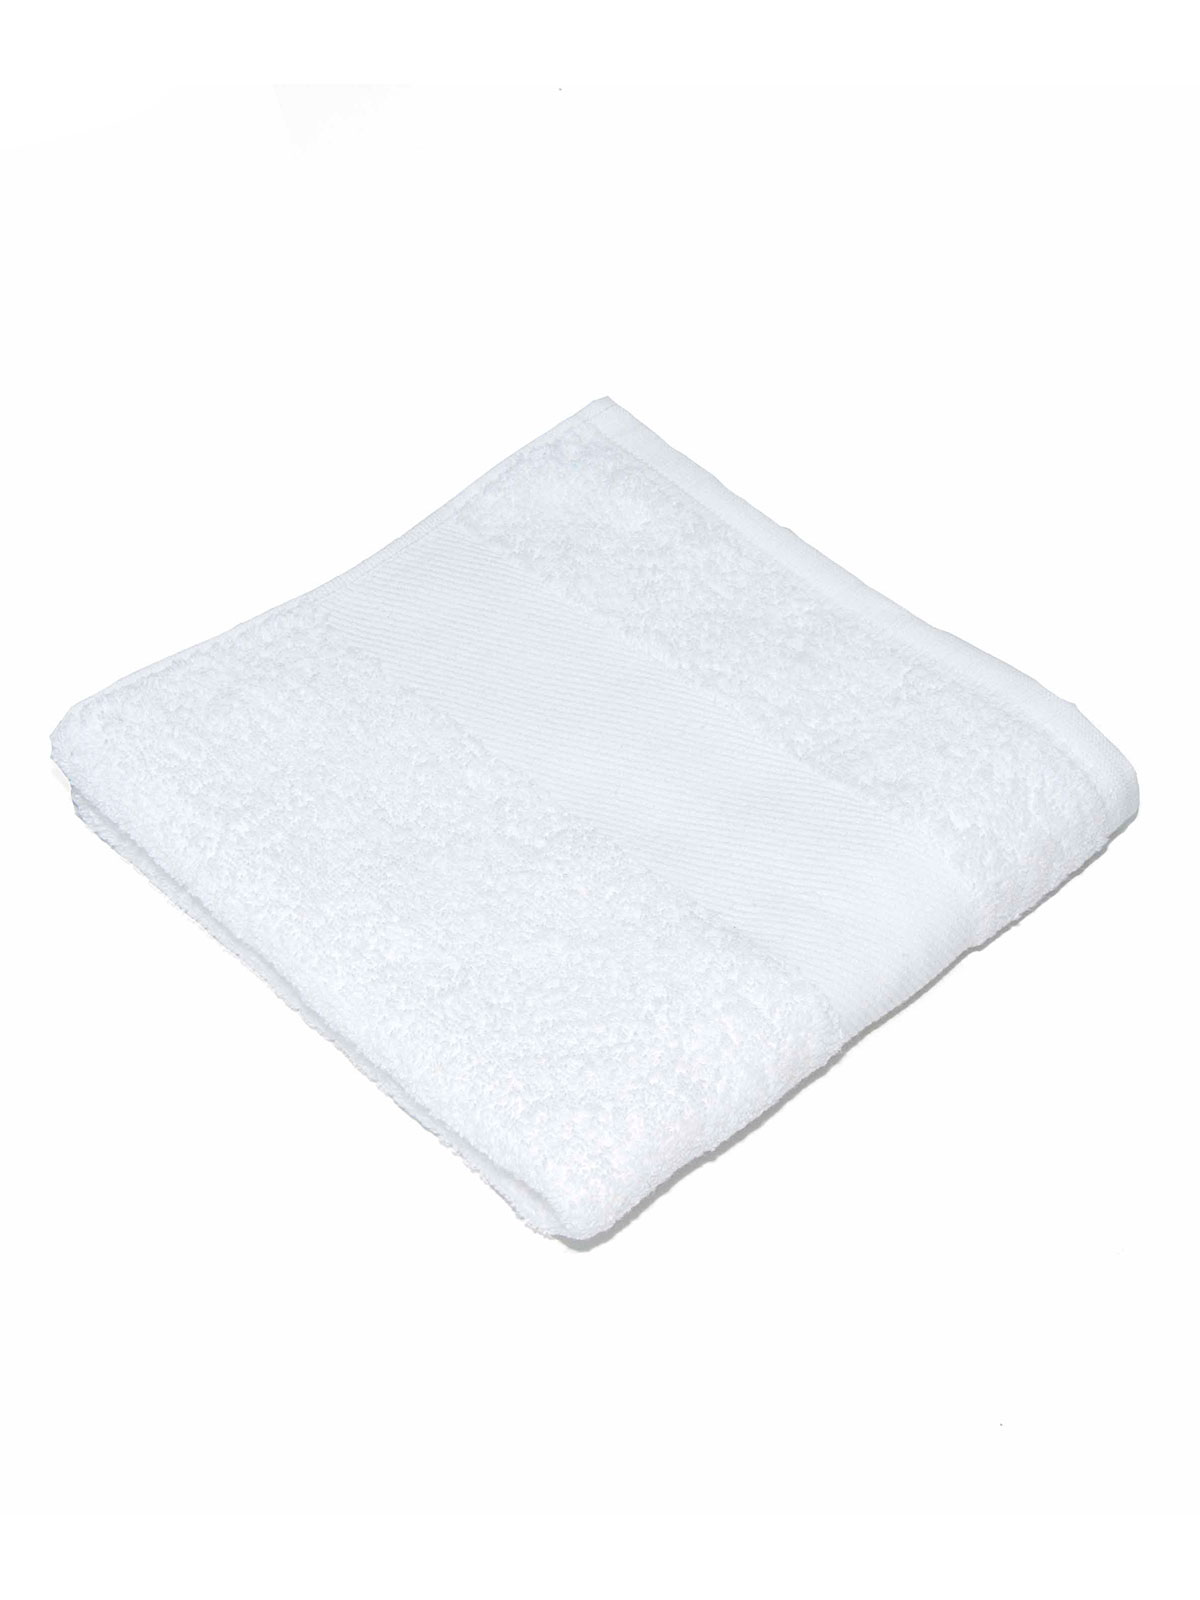 classic-towel-70x140-white.webp